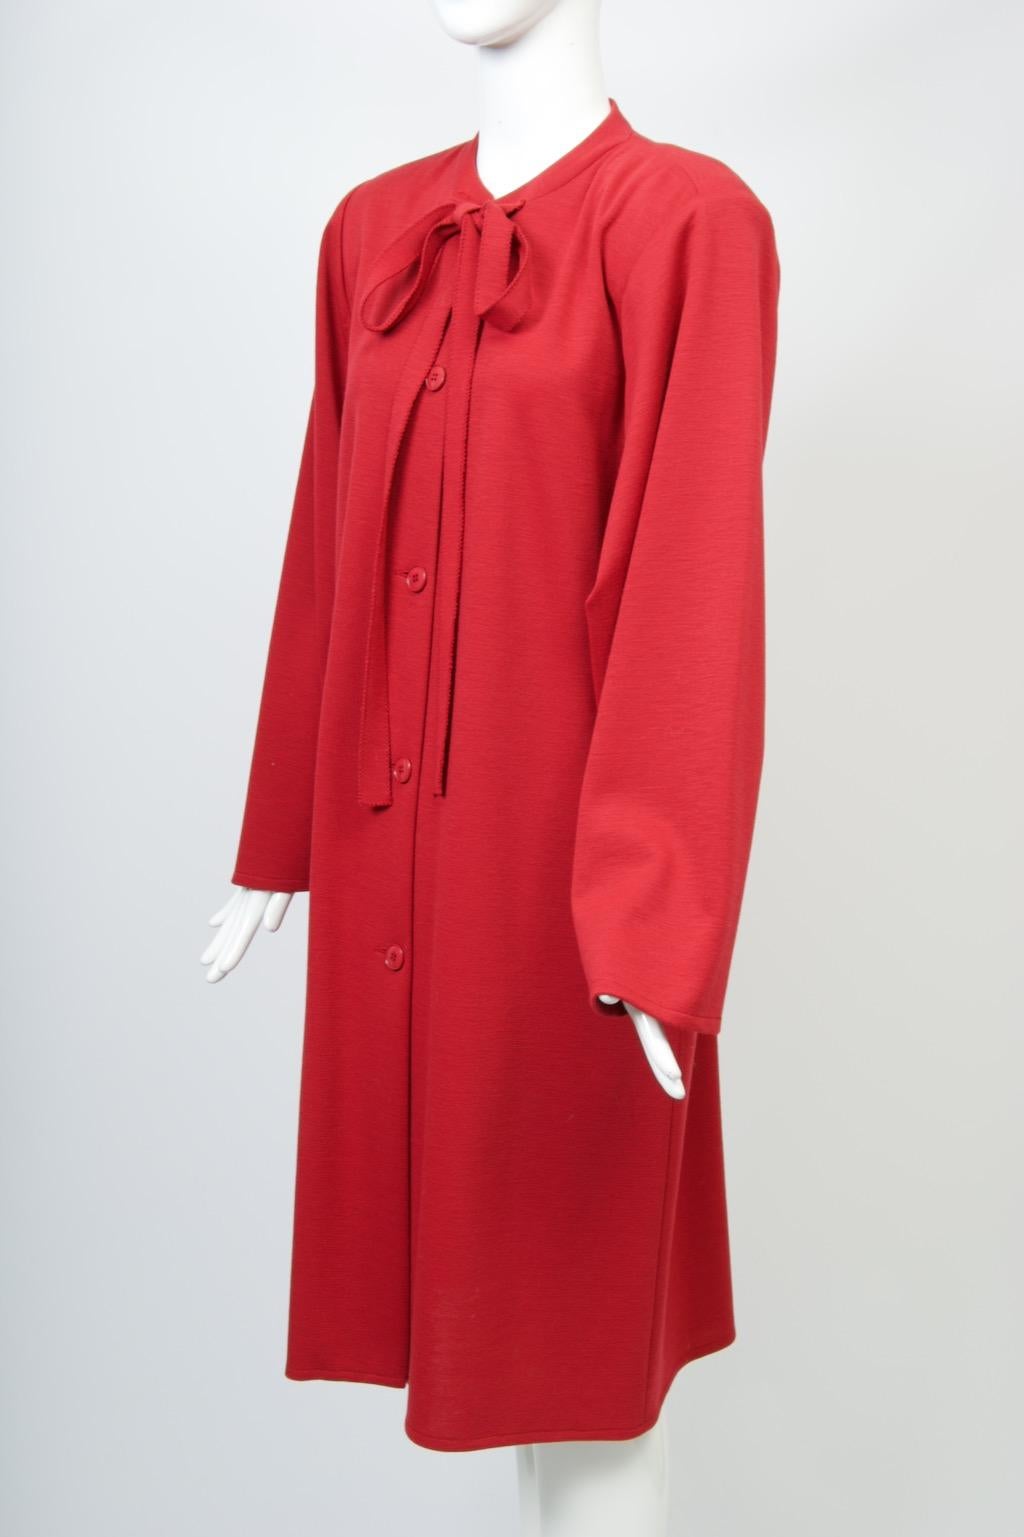 Sonia Rykiel Red Knit Coat/Dress For Sale 2